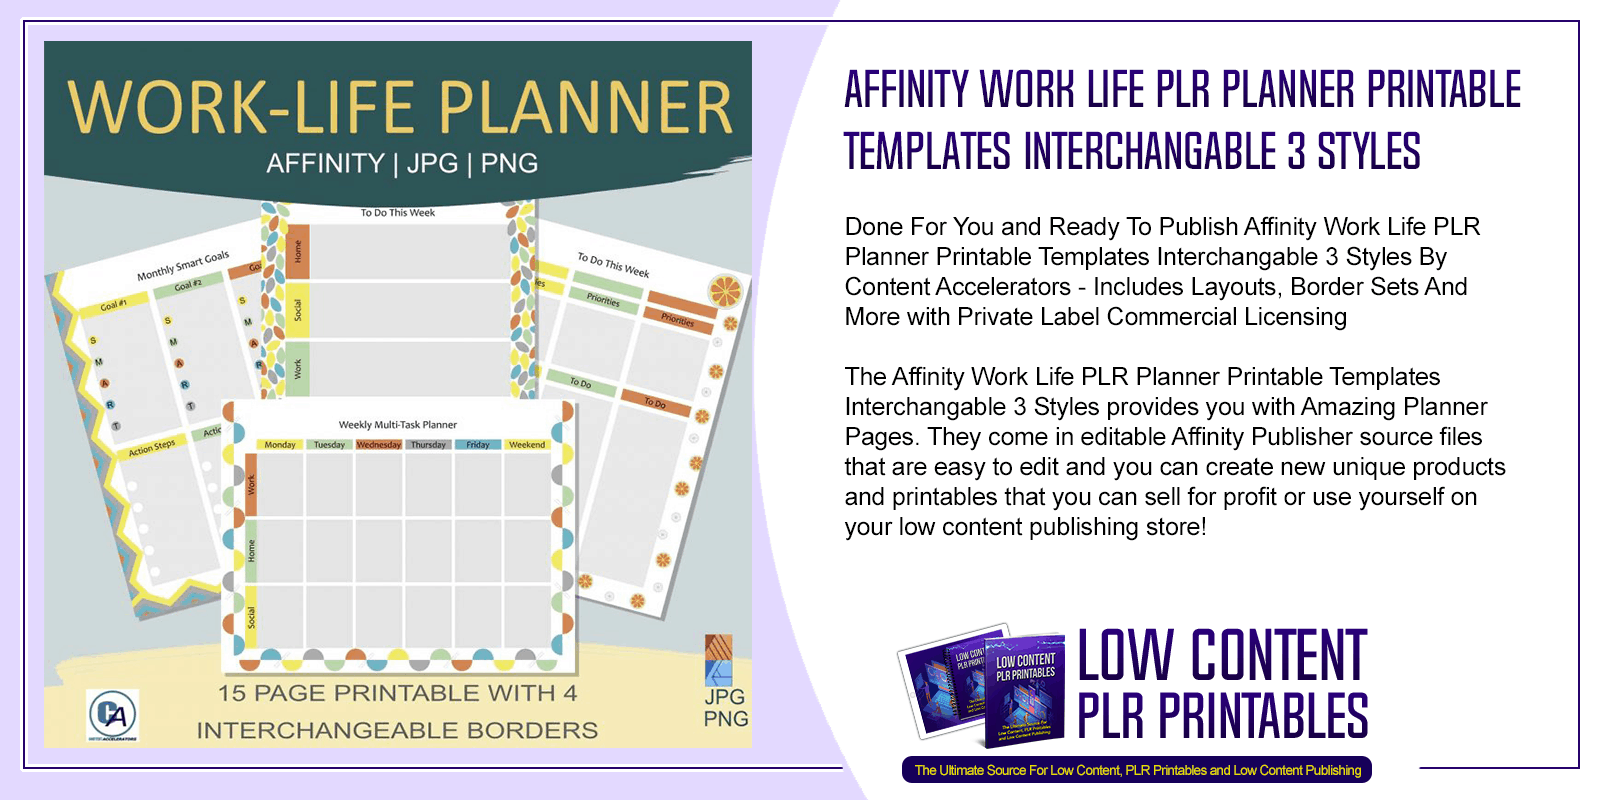 Affinity Work Life PLR Planner Printable Templates Interchangable 3 Styles